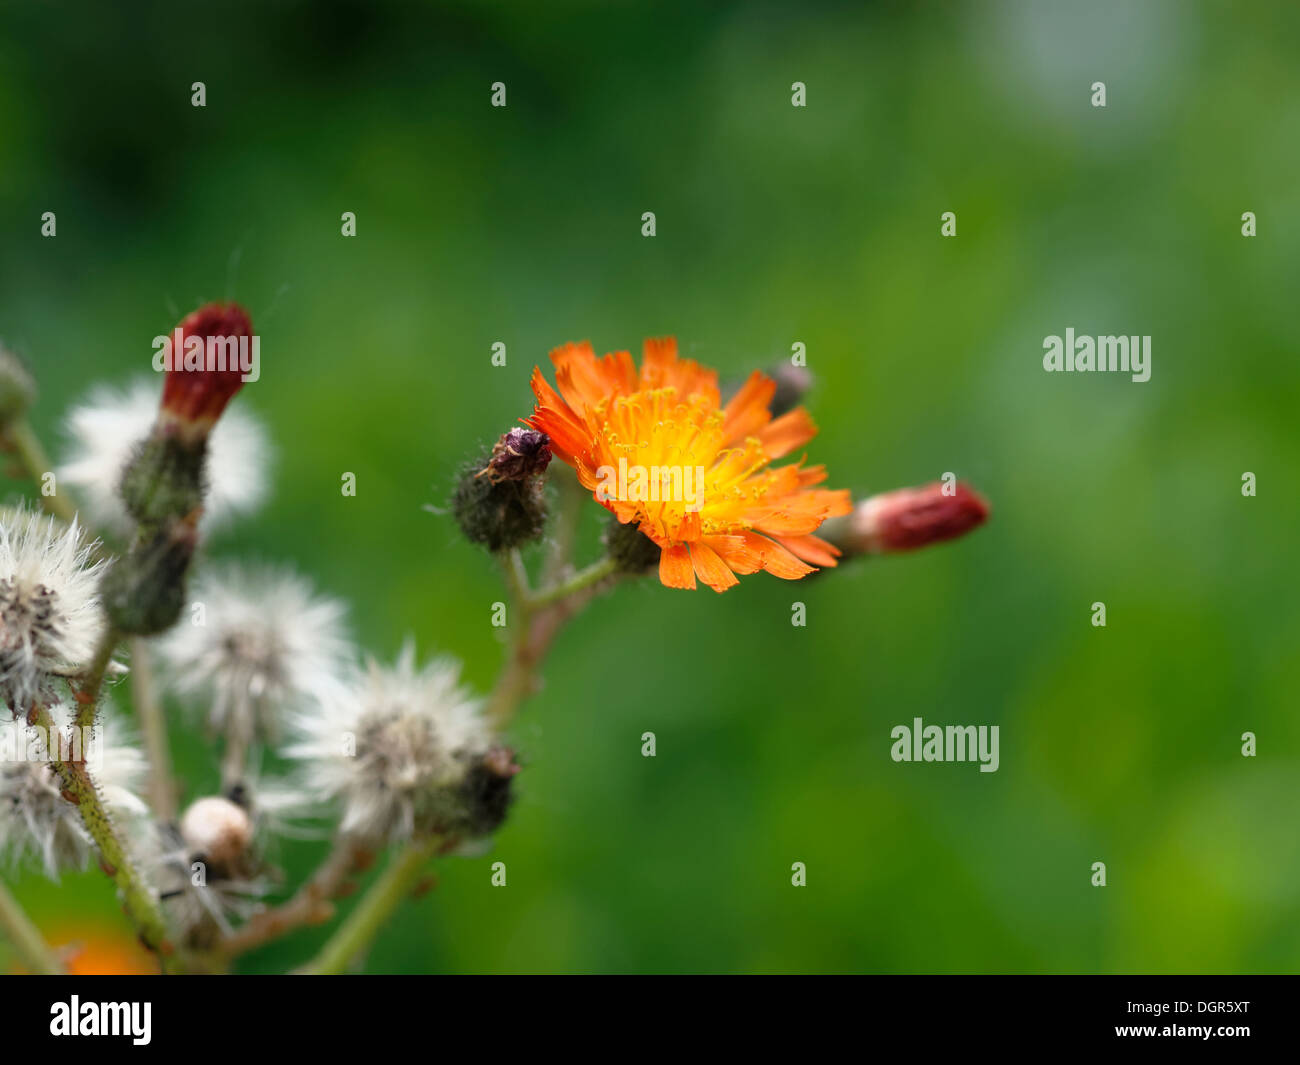 Orange hawkweed (Pilosella aurantiaca) flower with seed heads in background Stock Photo